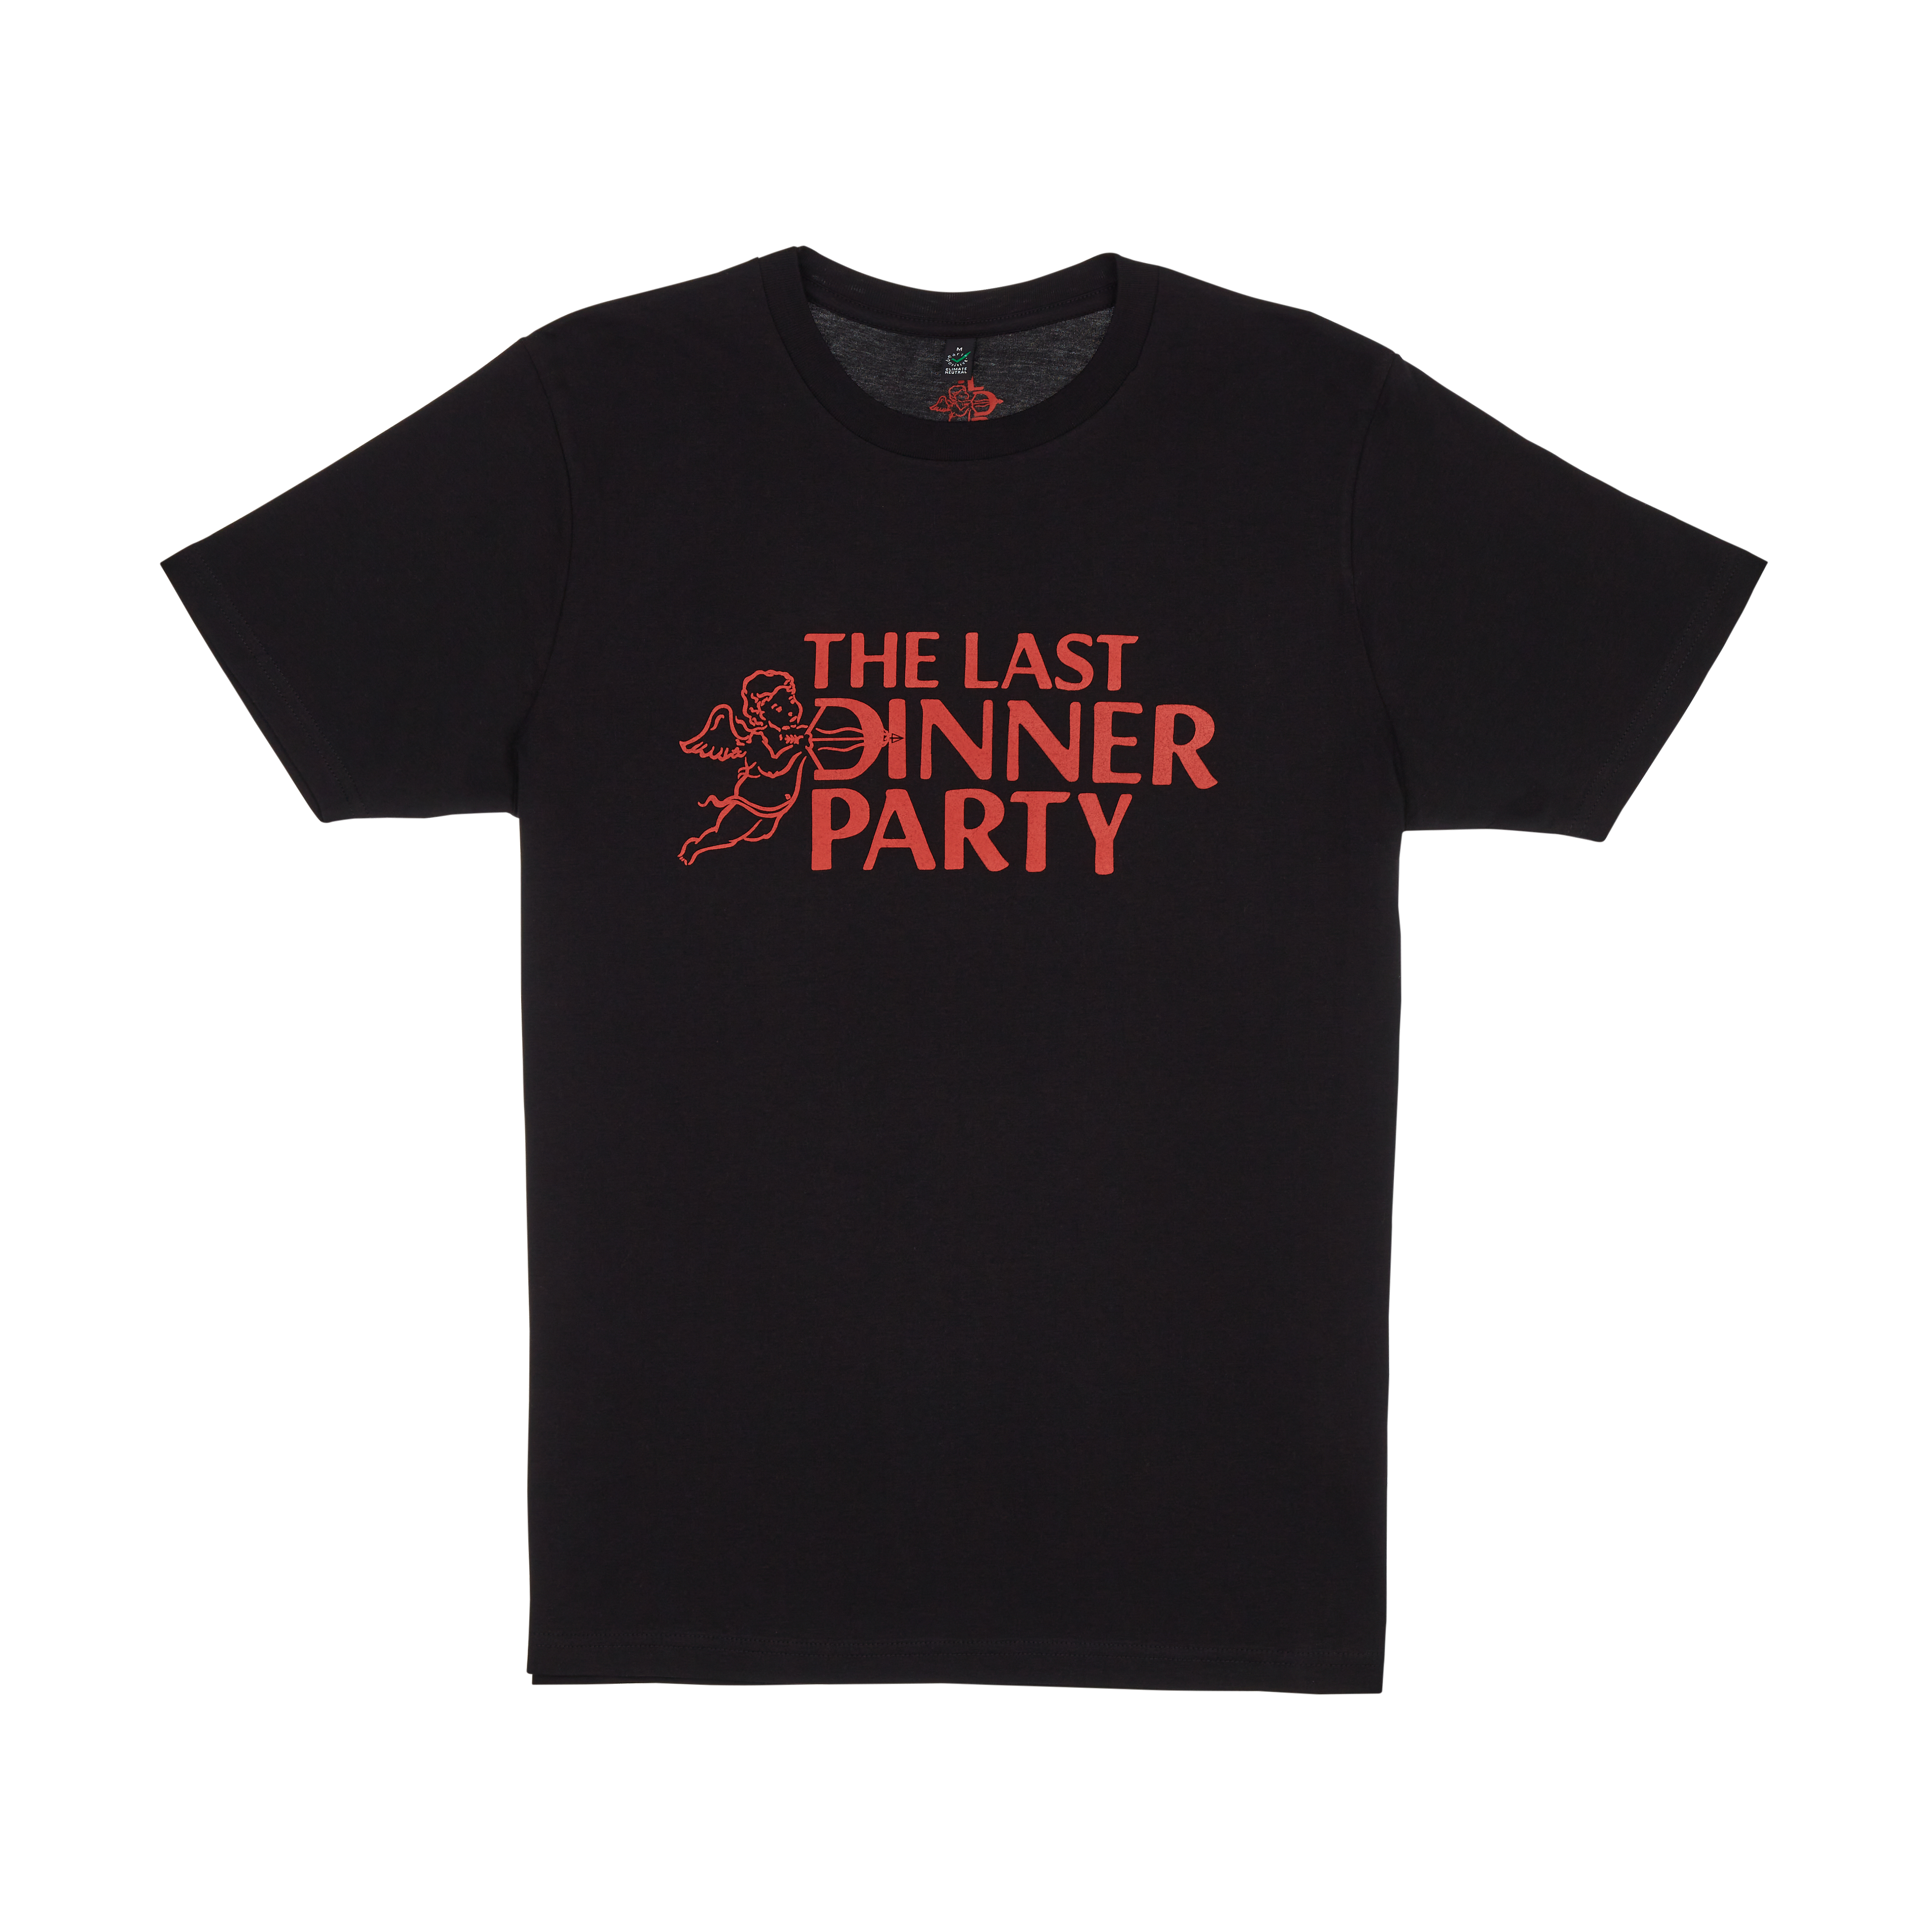 The Last Dinner Party - Black Logo Tee